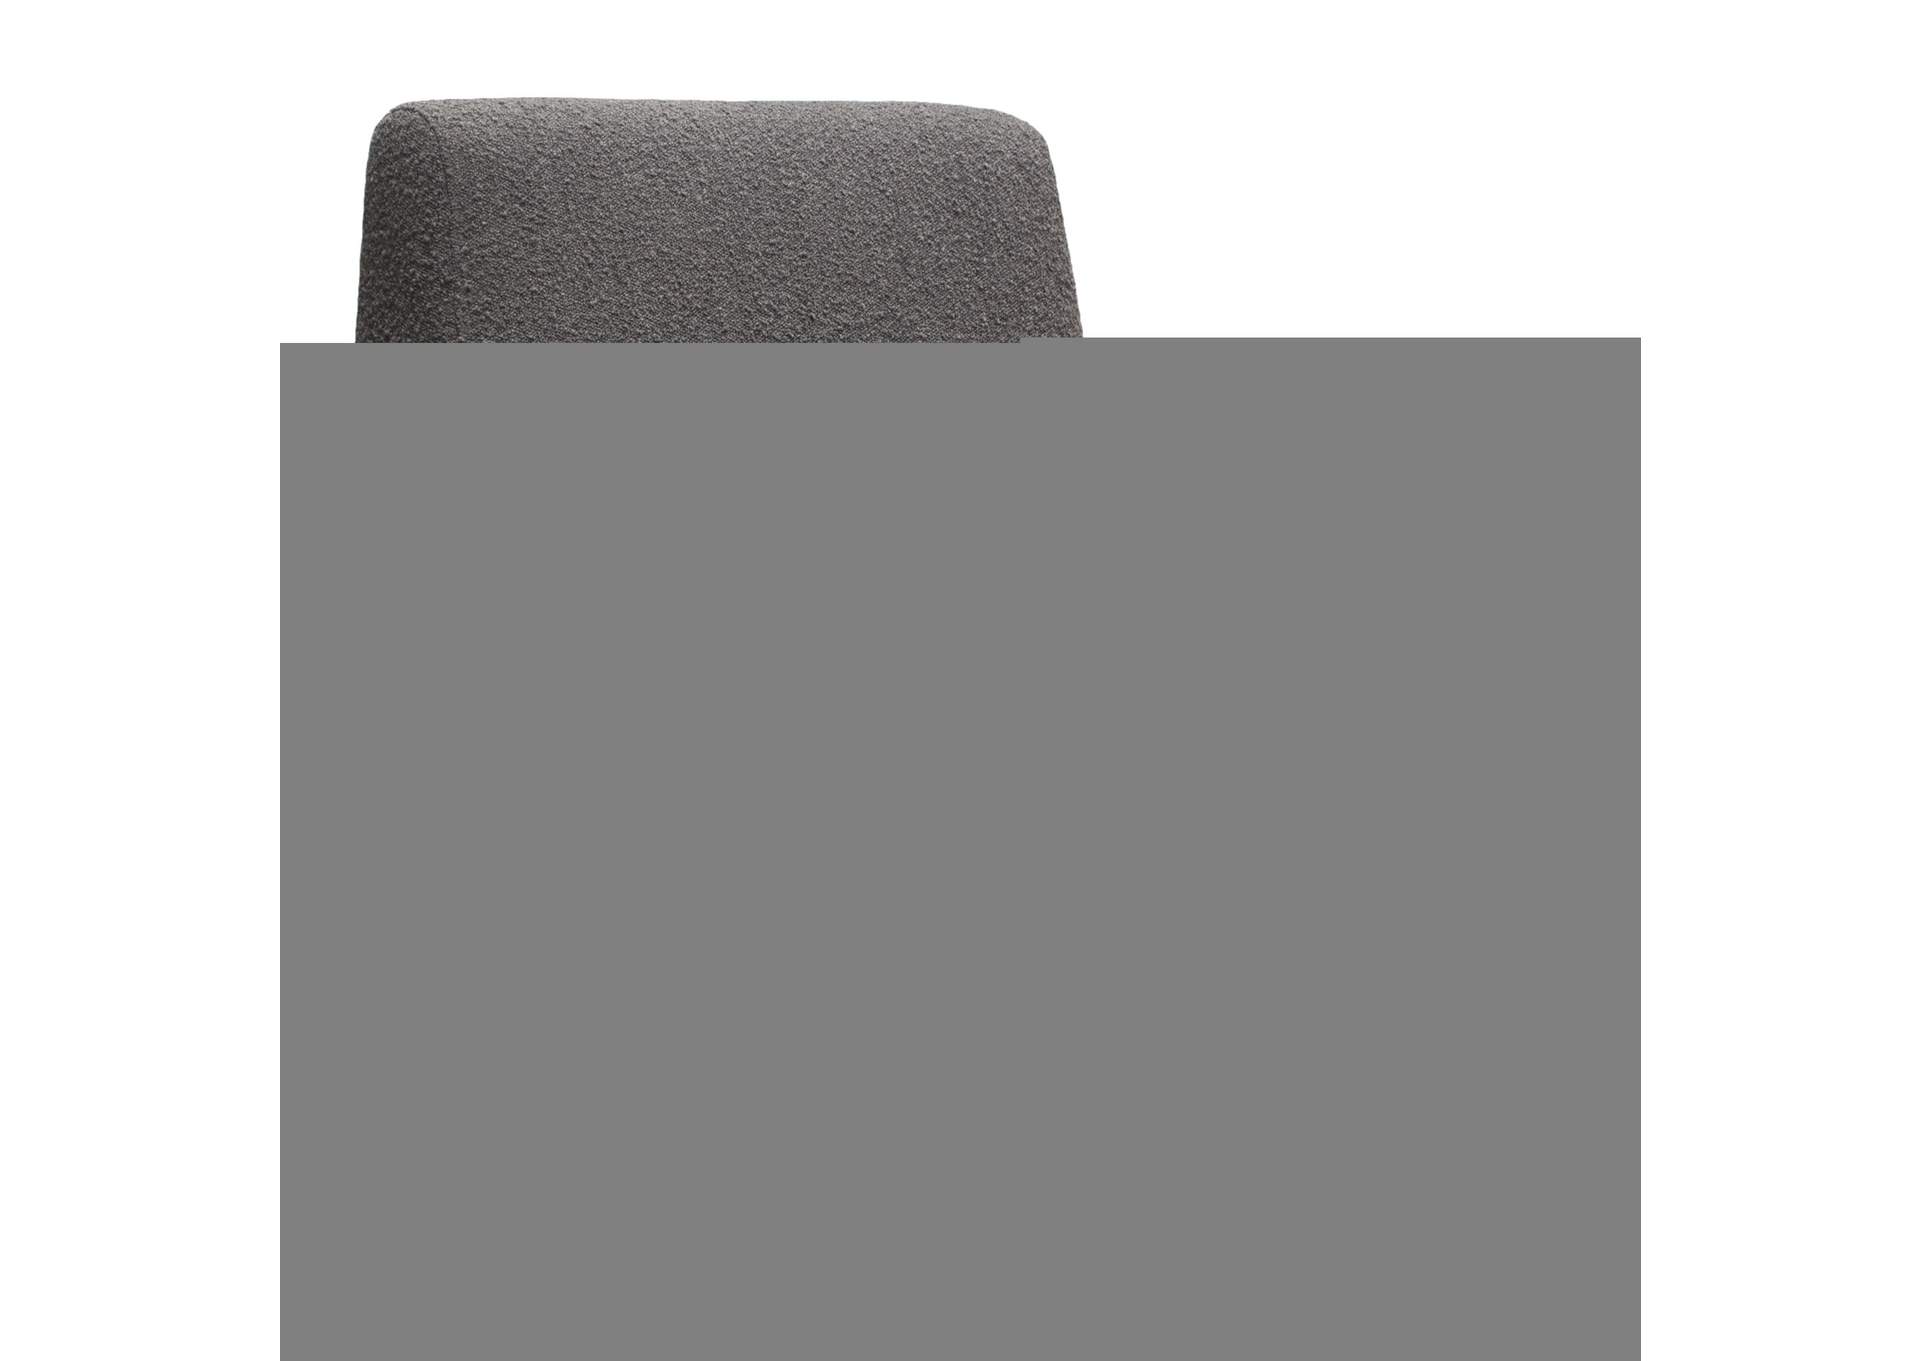 Cameron Accent Chair in Chair Boucle Textured Fabric w/ Black Leg by Diamond Sofa,Diamond Sofa